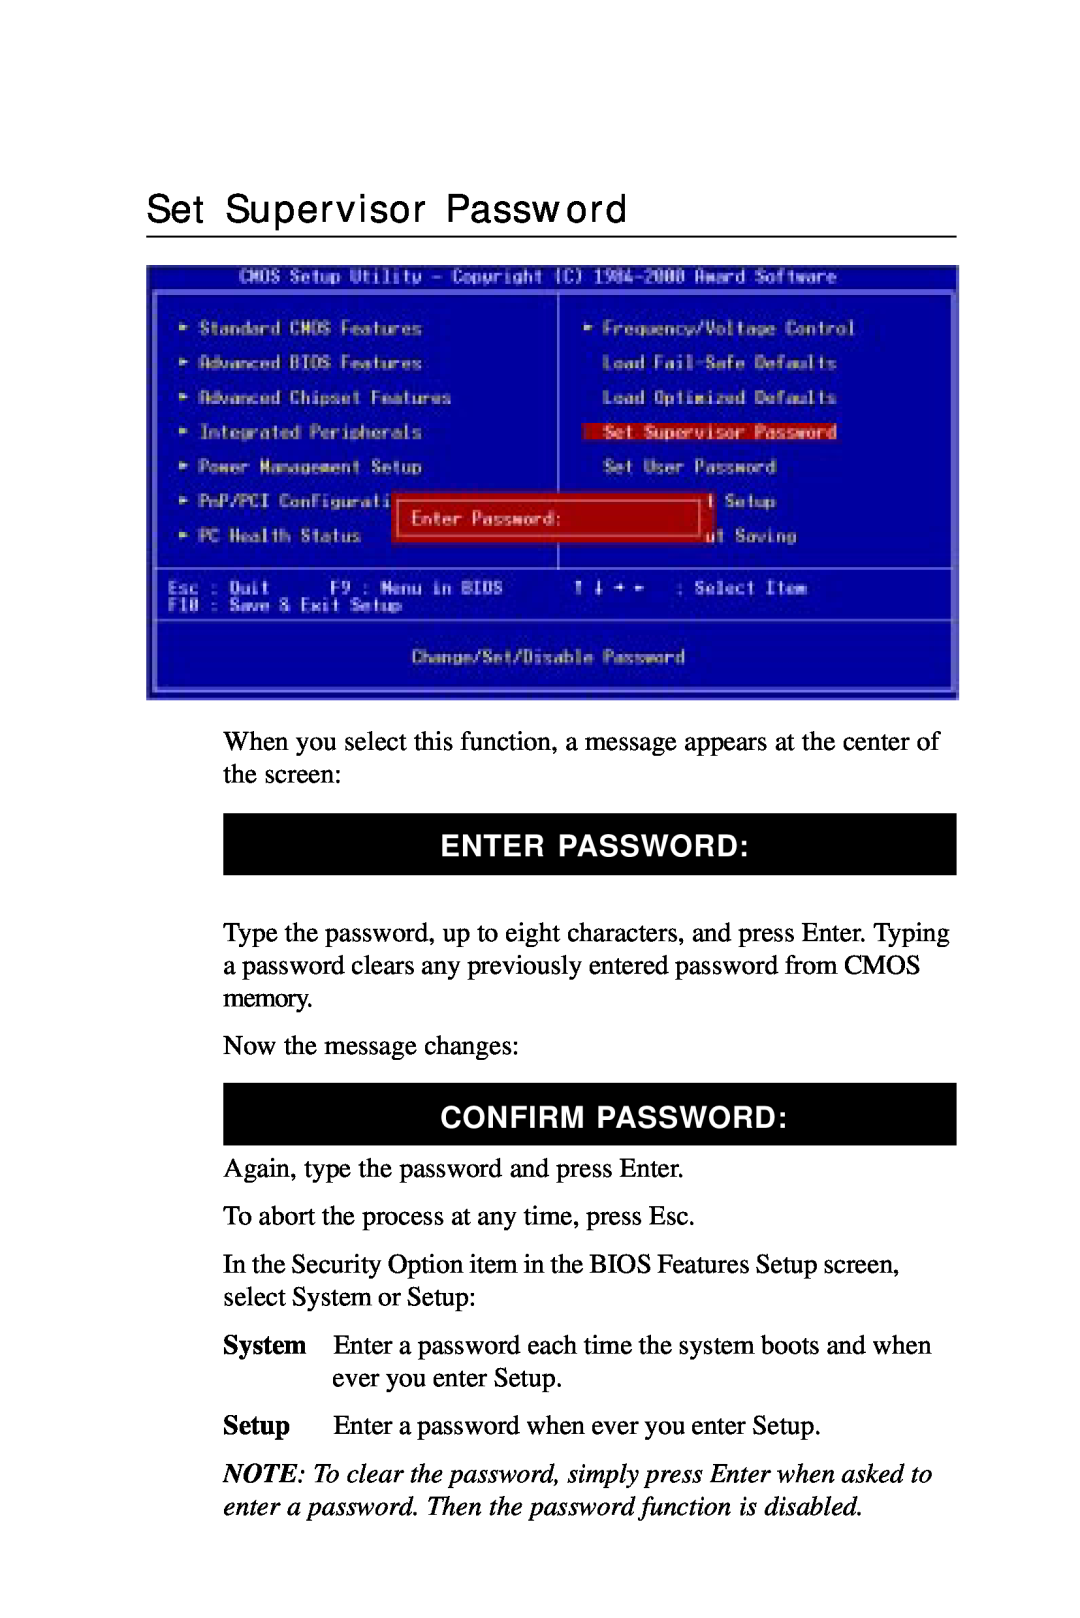 Intel PCM-6896 manual Set Supervisor Password, Enter Password, Confirm Password 